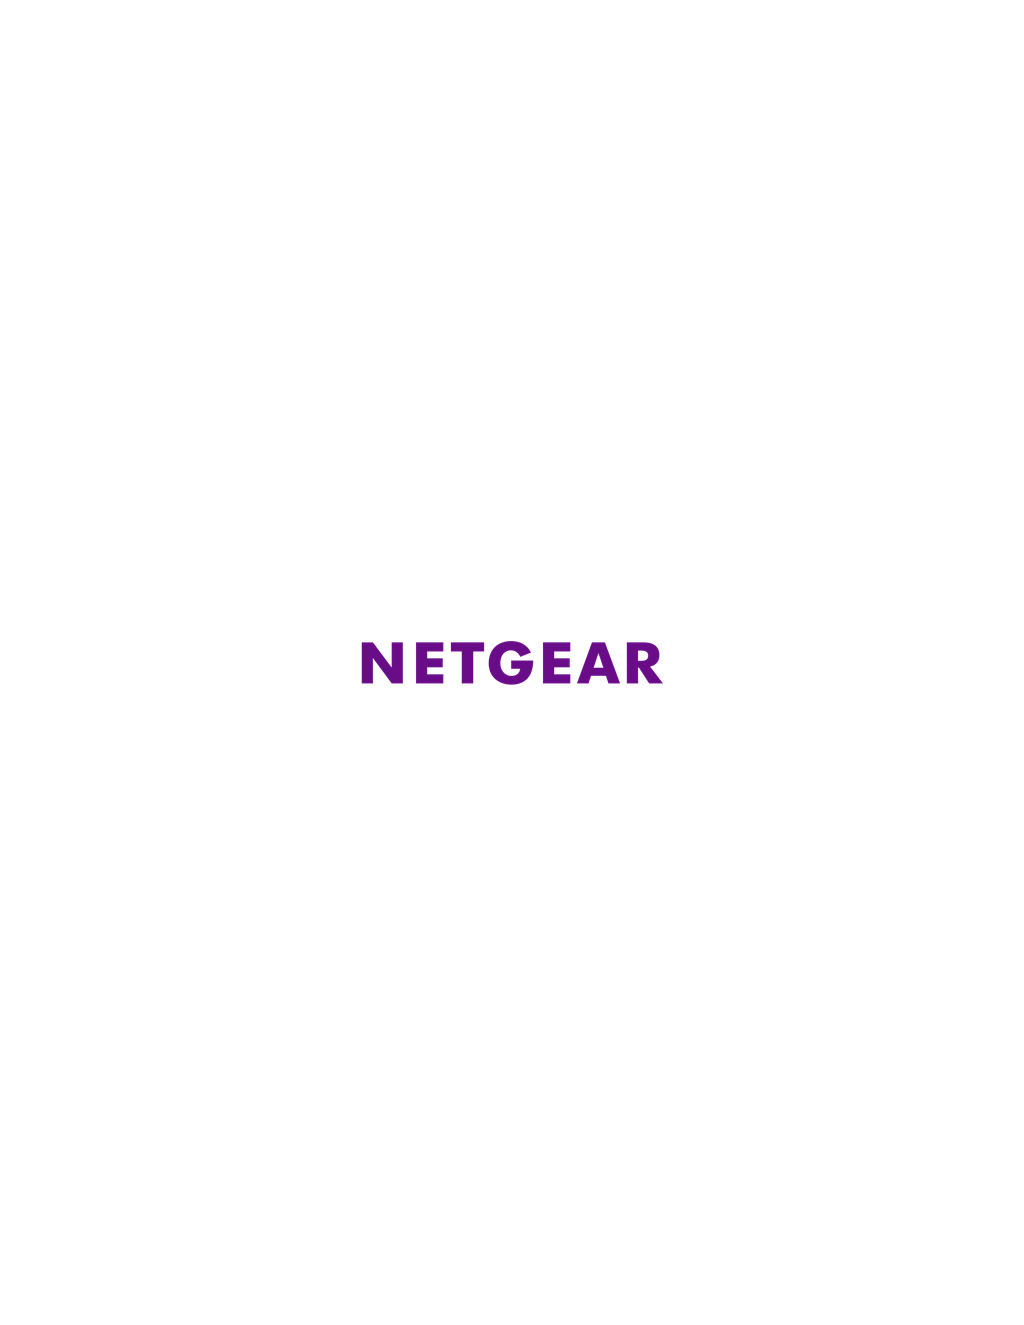 Netgear logotype, transparent .png, medium, large